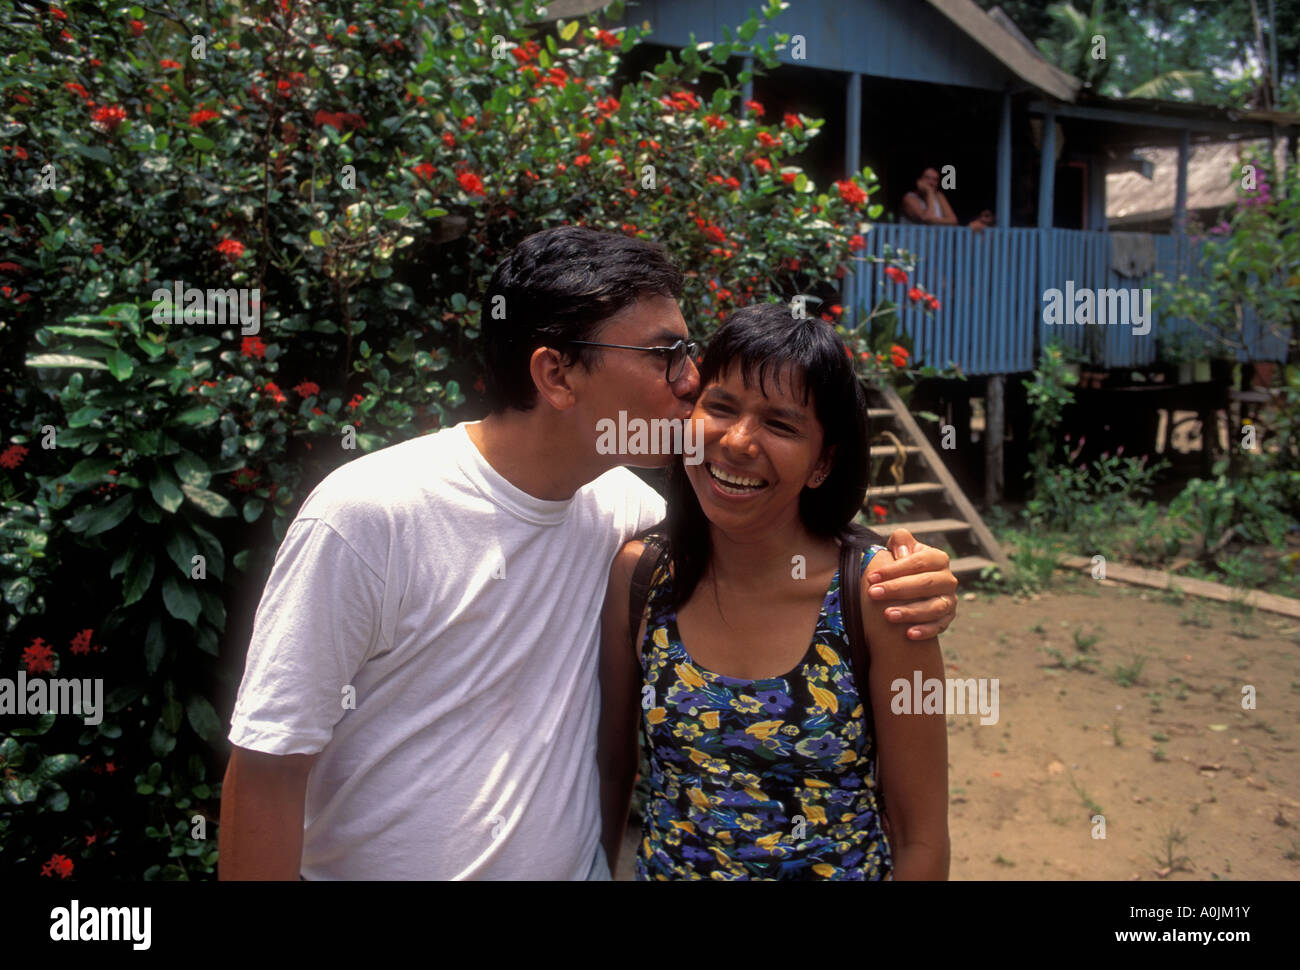 Brazilian man, Brazilian woman, greeting with kiss on cheek, on Terra Nova  Island, Amazon River east Manaus in Amazonas State, Brazil, South America  Stock Photo - Alamy